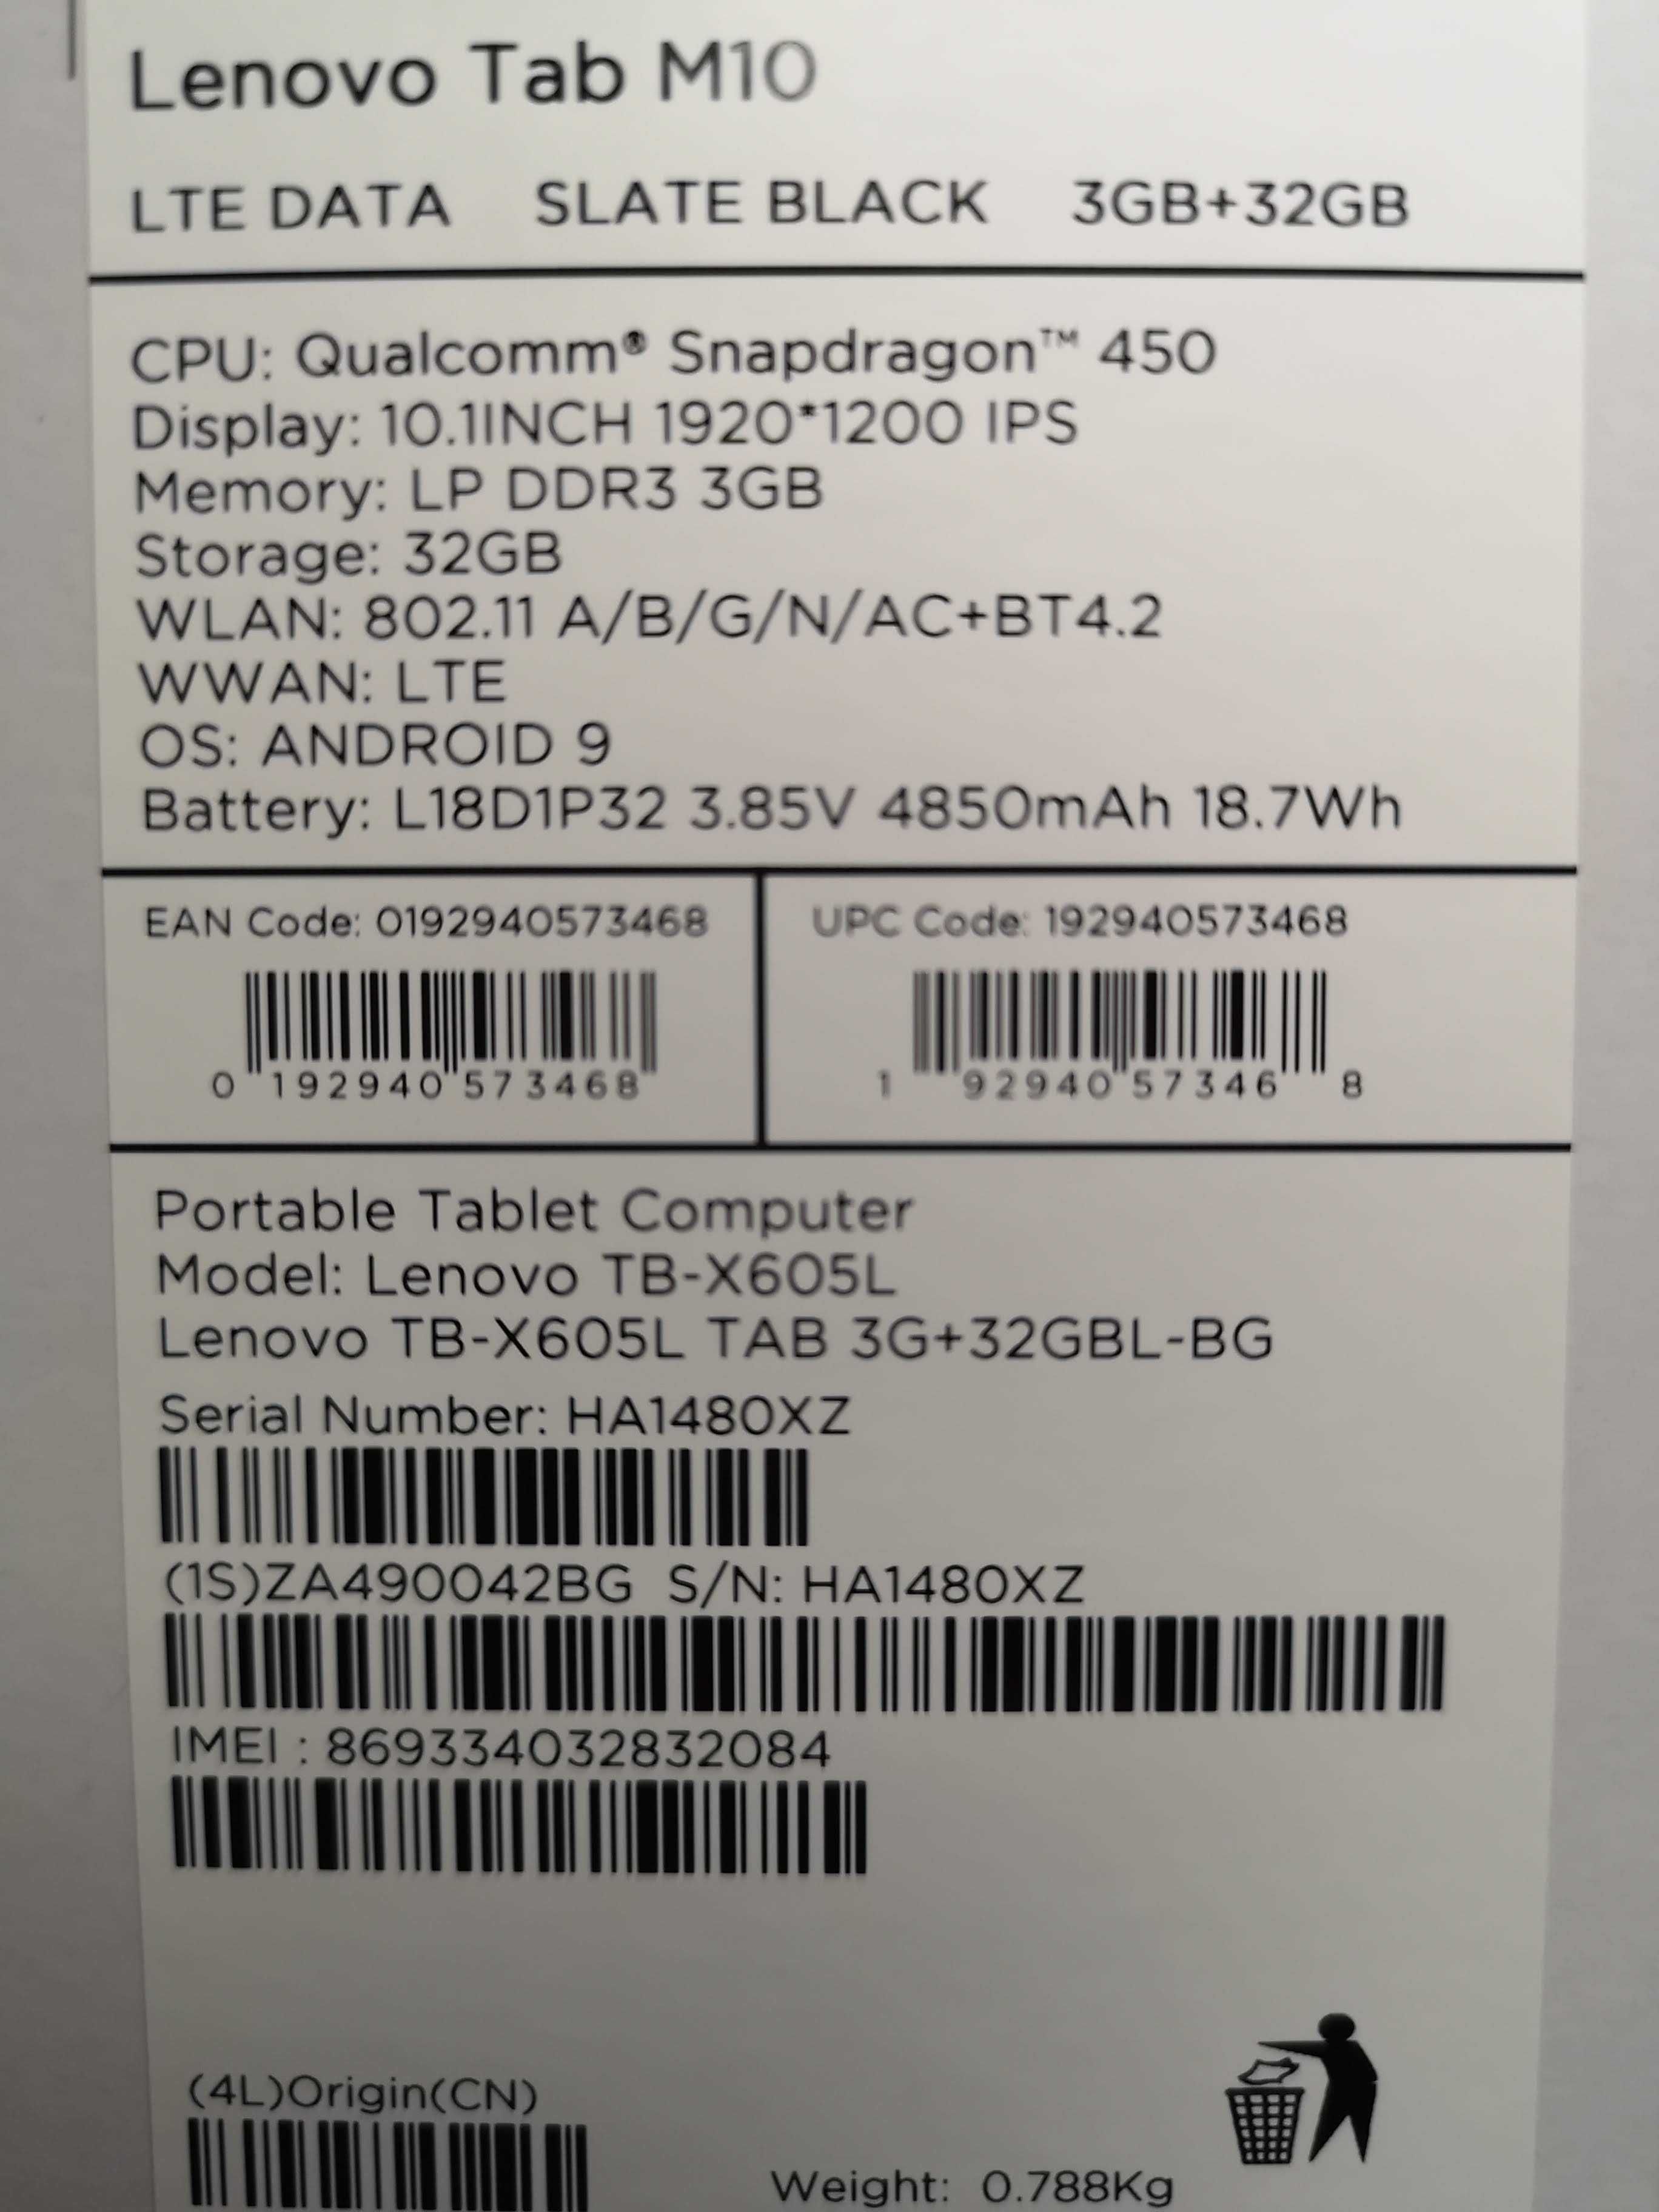 Vand tableta Lenovo Tab M10, Octa-Core 1.8GHz, 10.1", 3GB RAM, 32GB.